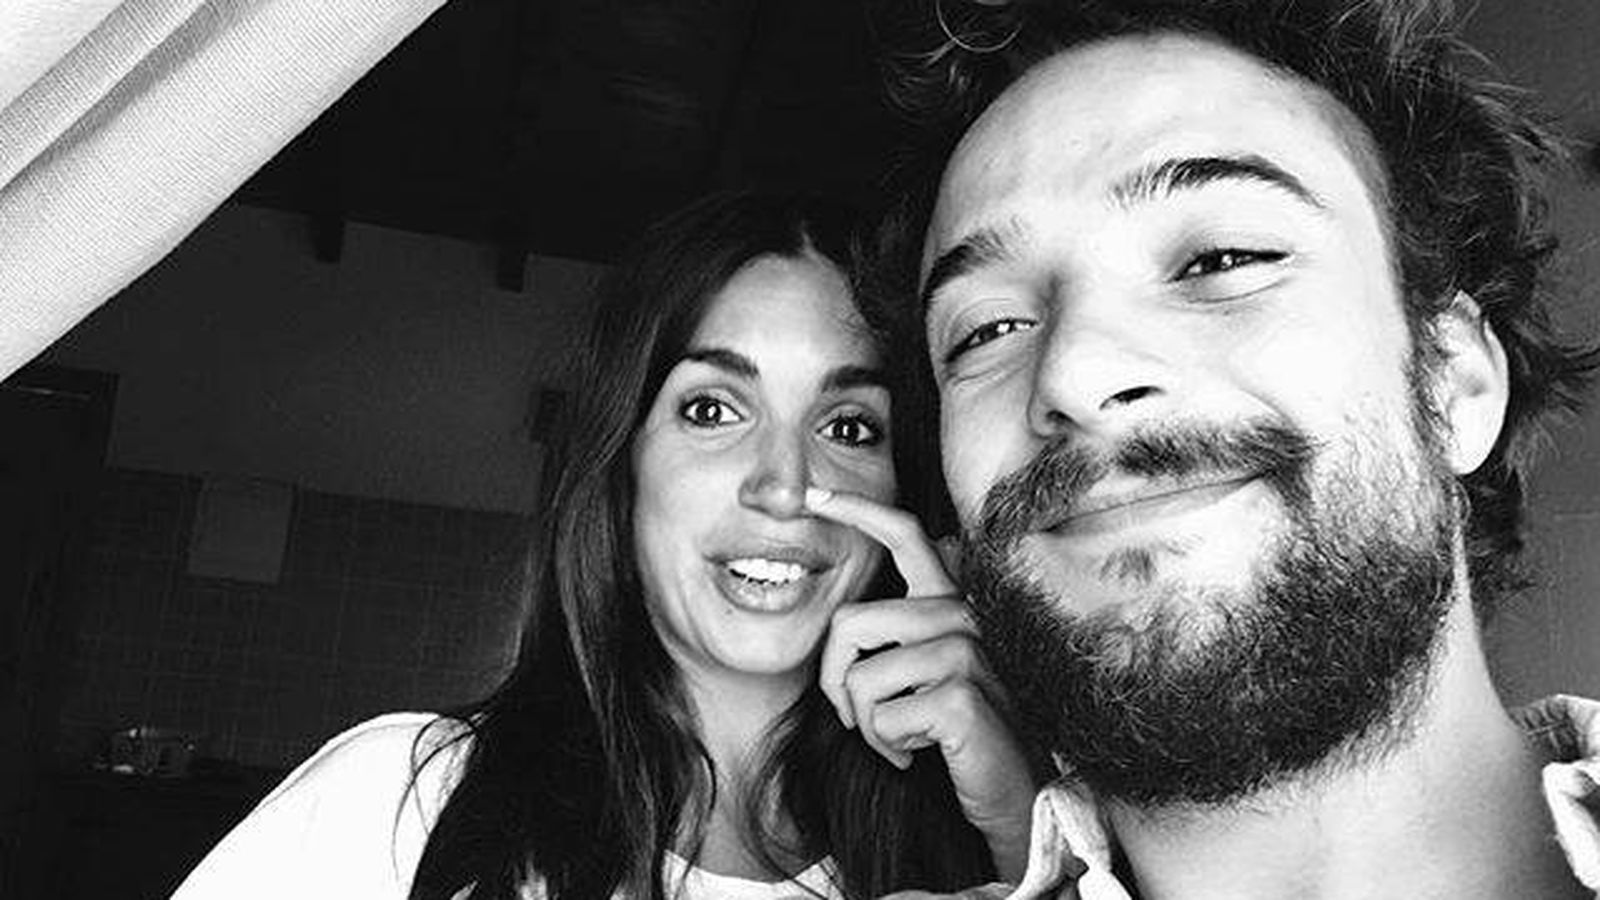 Foto: Gonzalo, con Elena Furiase. (Instagram)